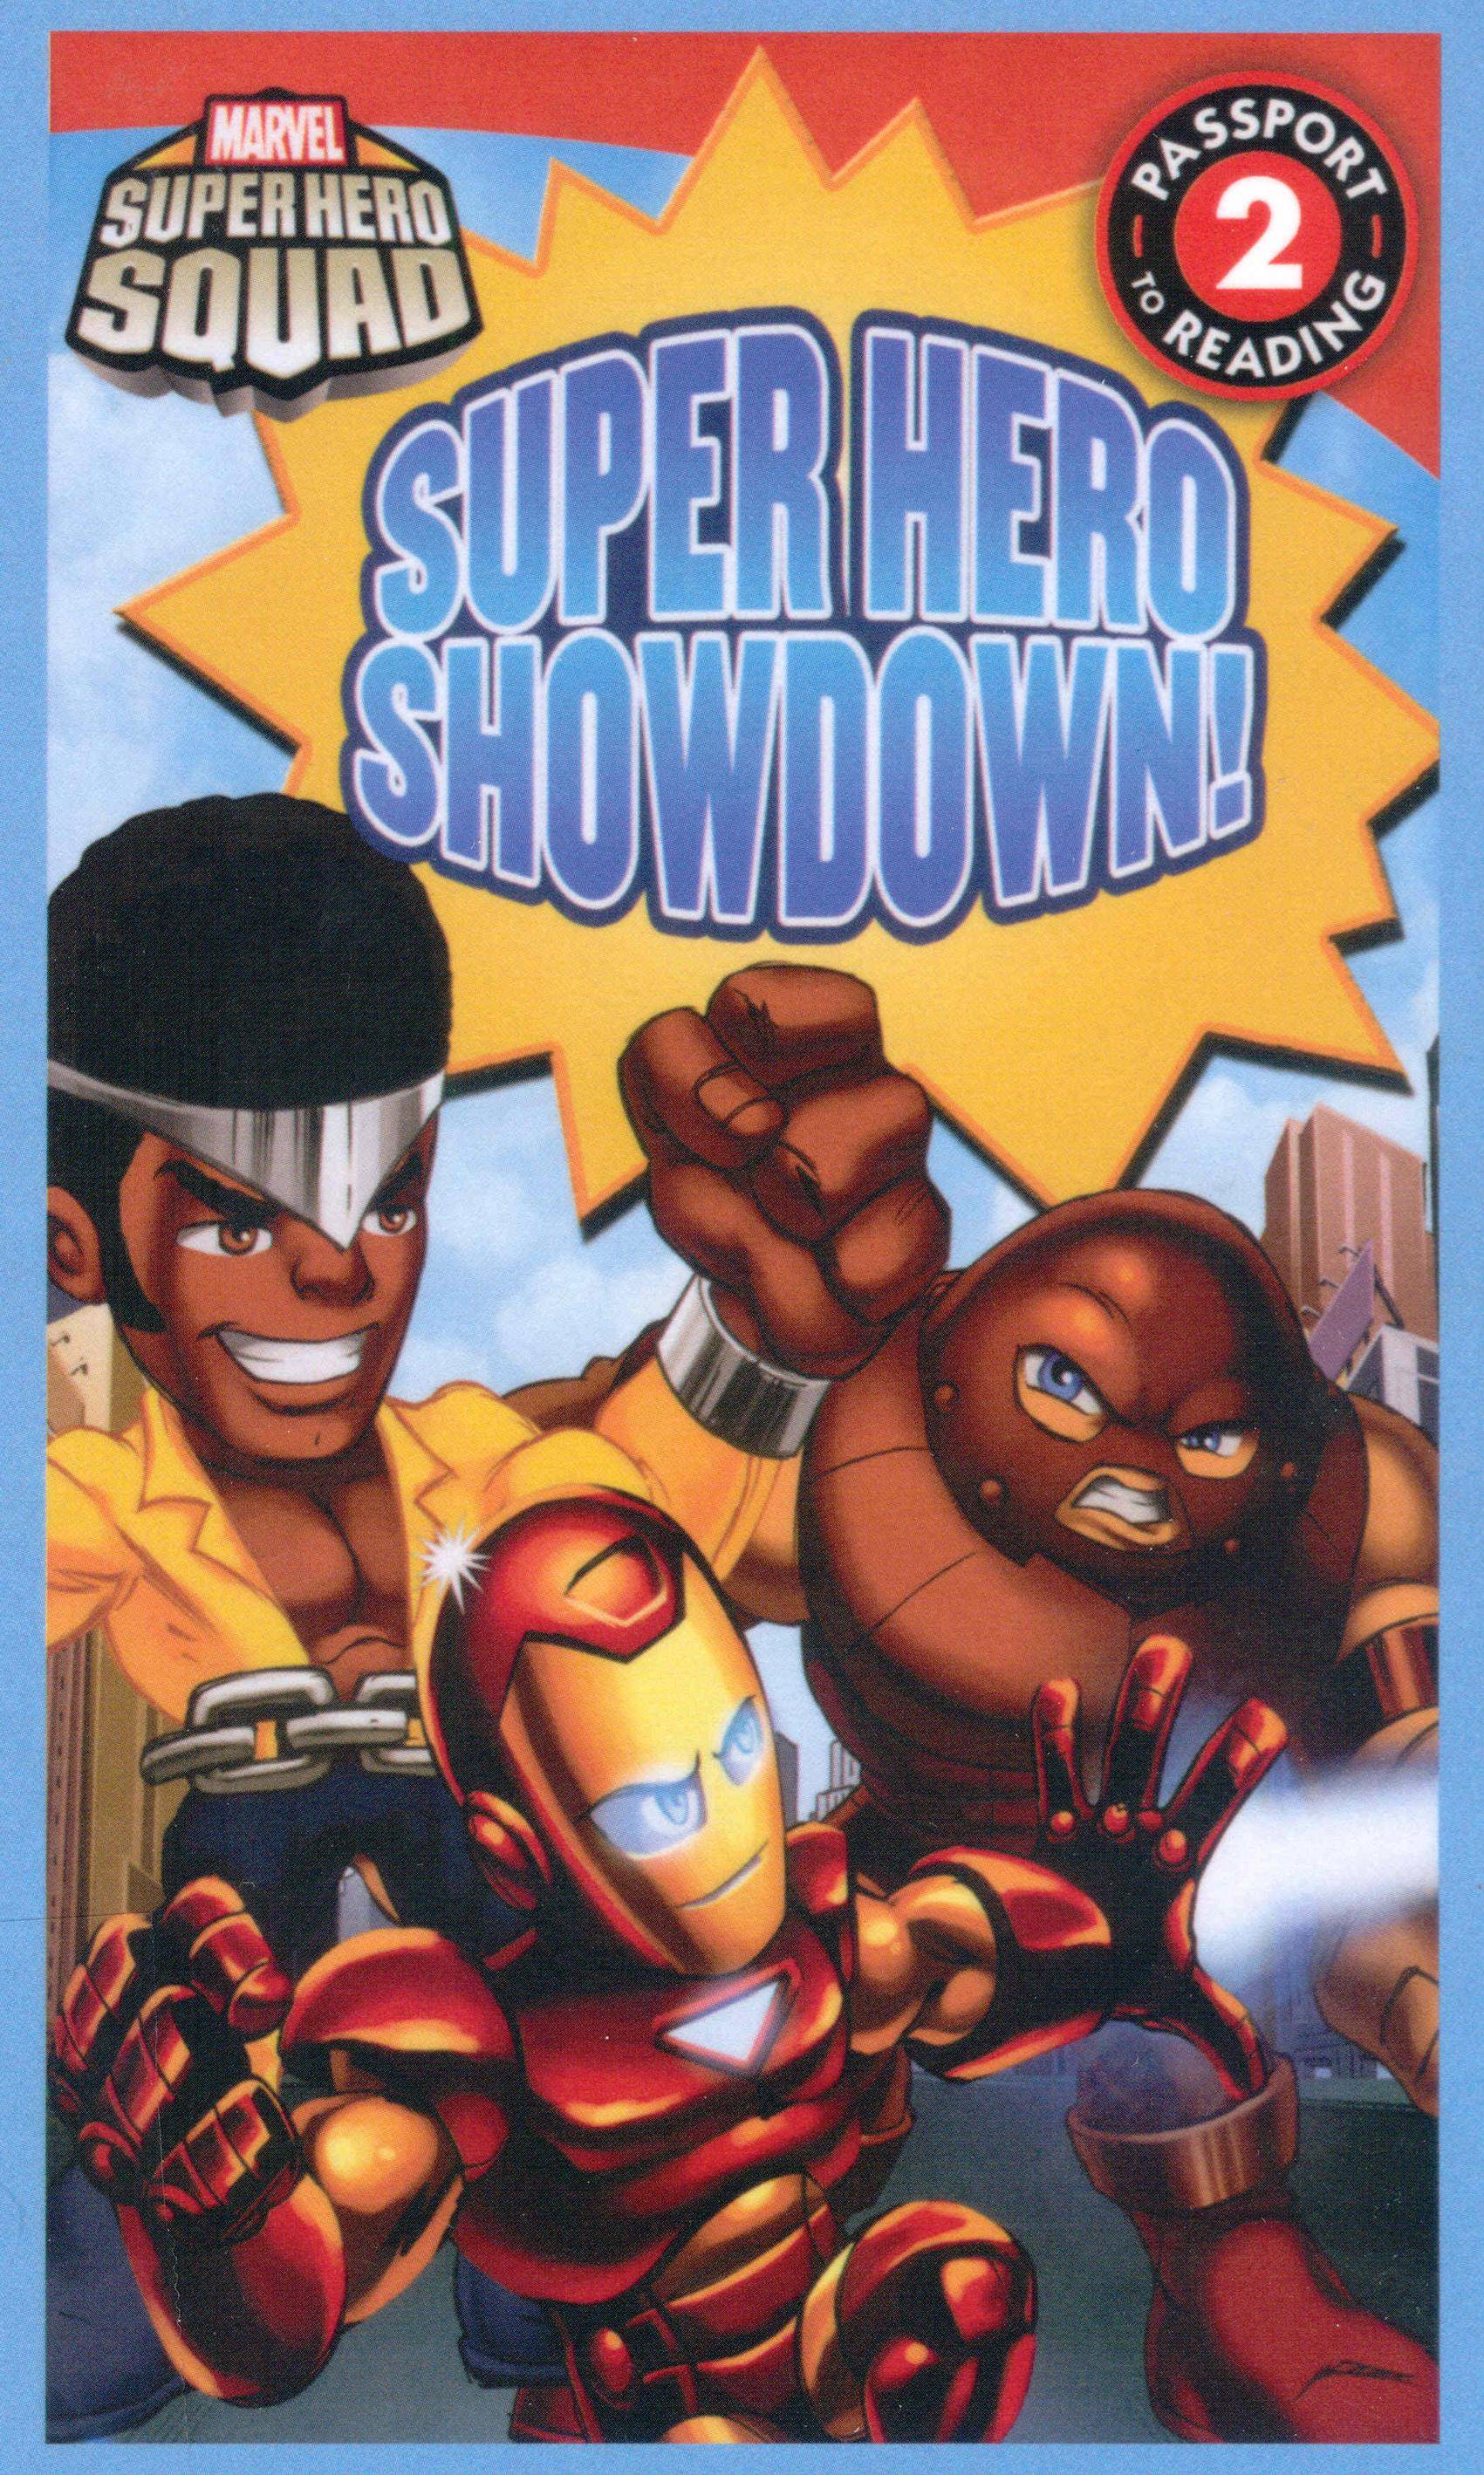 Marvel Super Hero Squad - Super Hero Showdown Little Brown